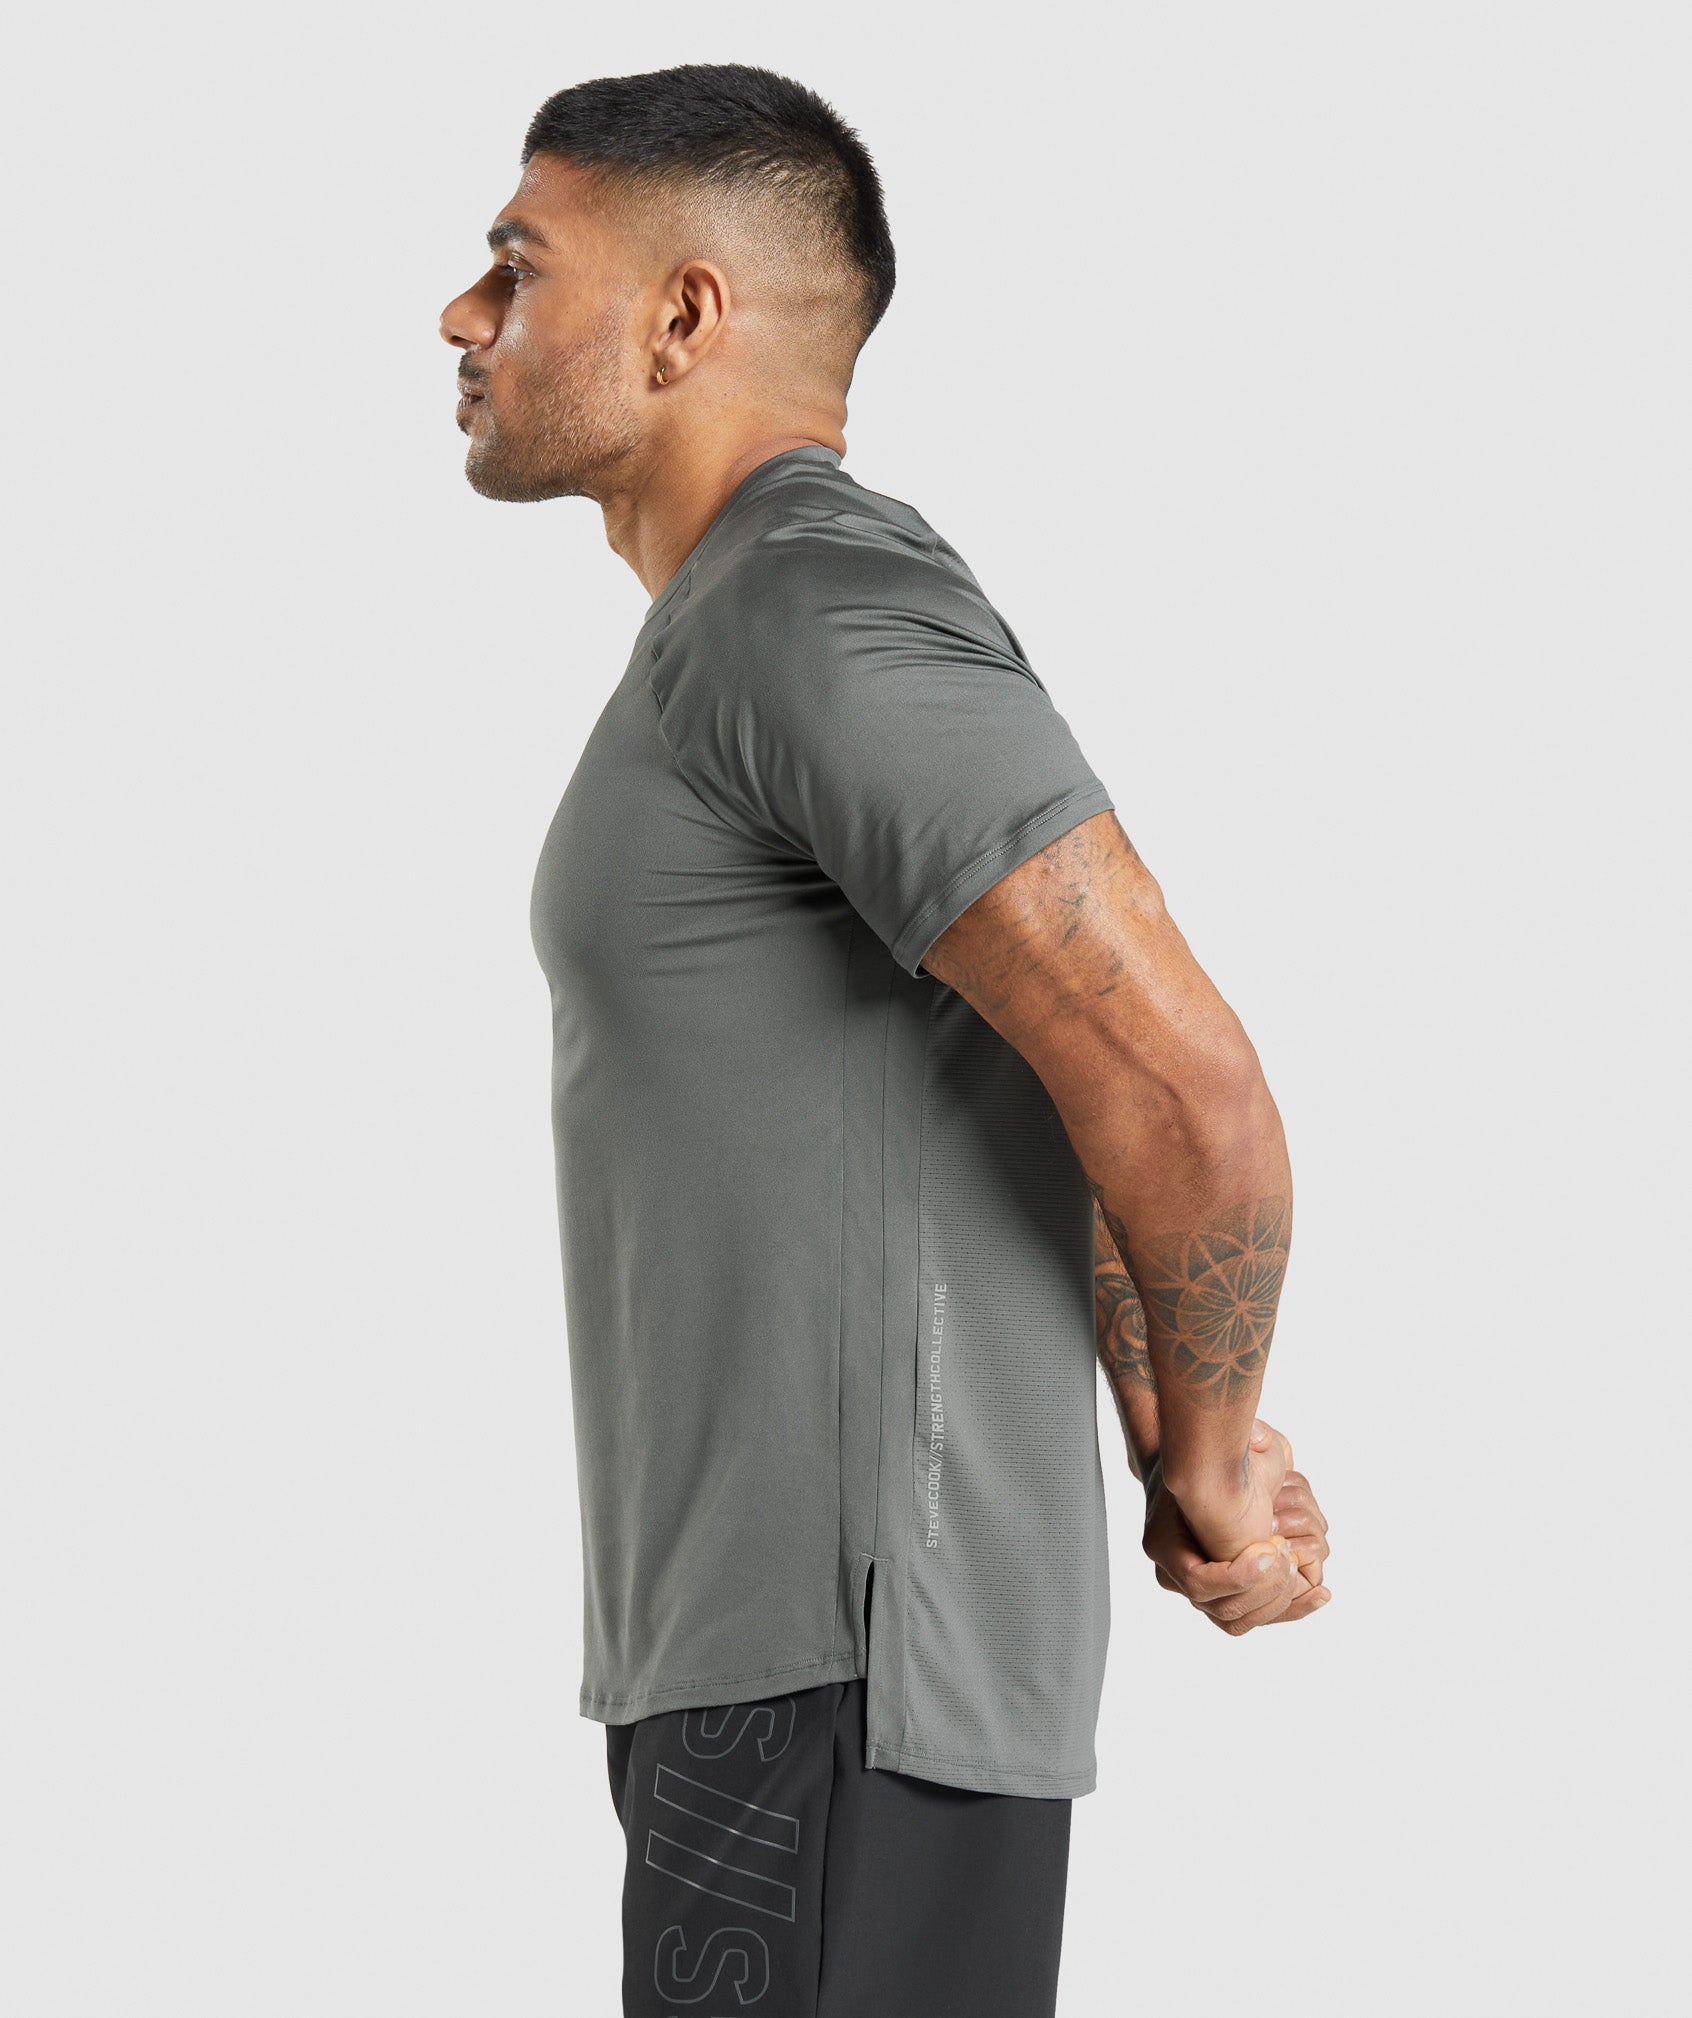 Gymshark//Steve Cook T-Shirt in Charcoal Grey